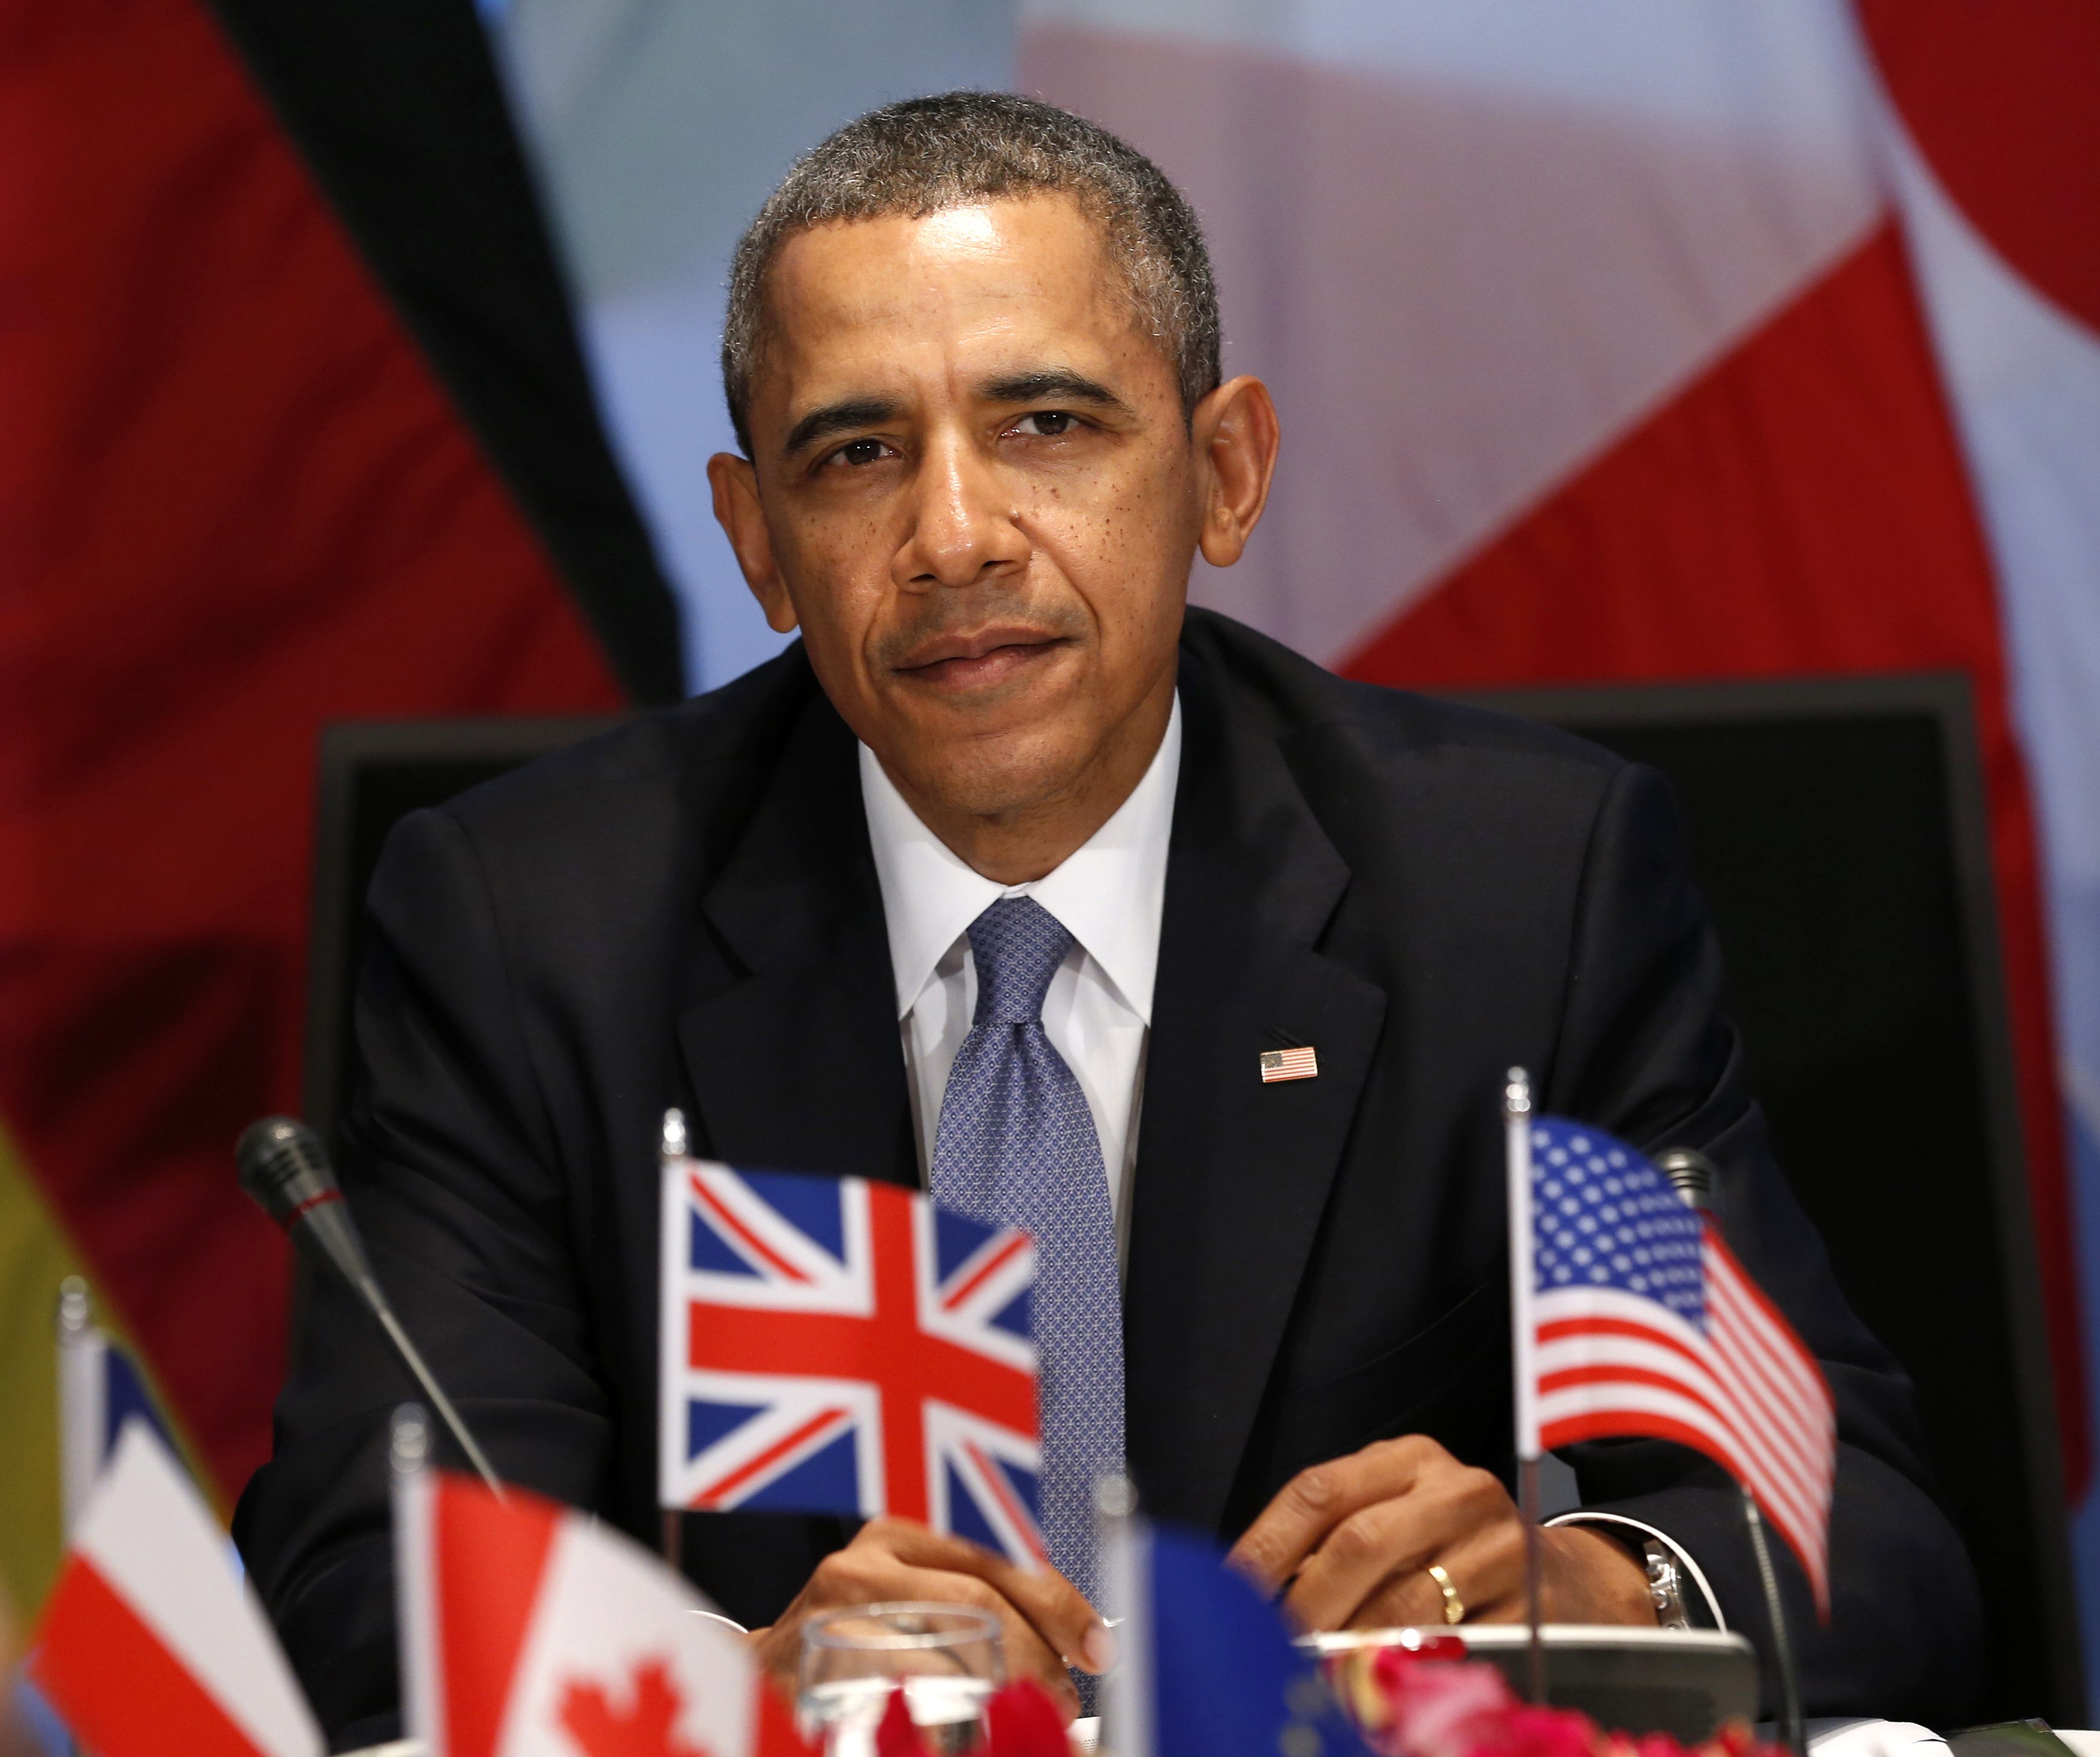 West cancels Russia's G8 summit over Ukraine crisis